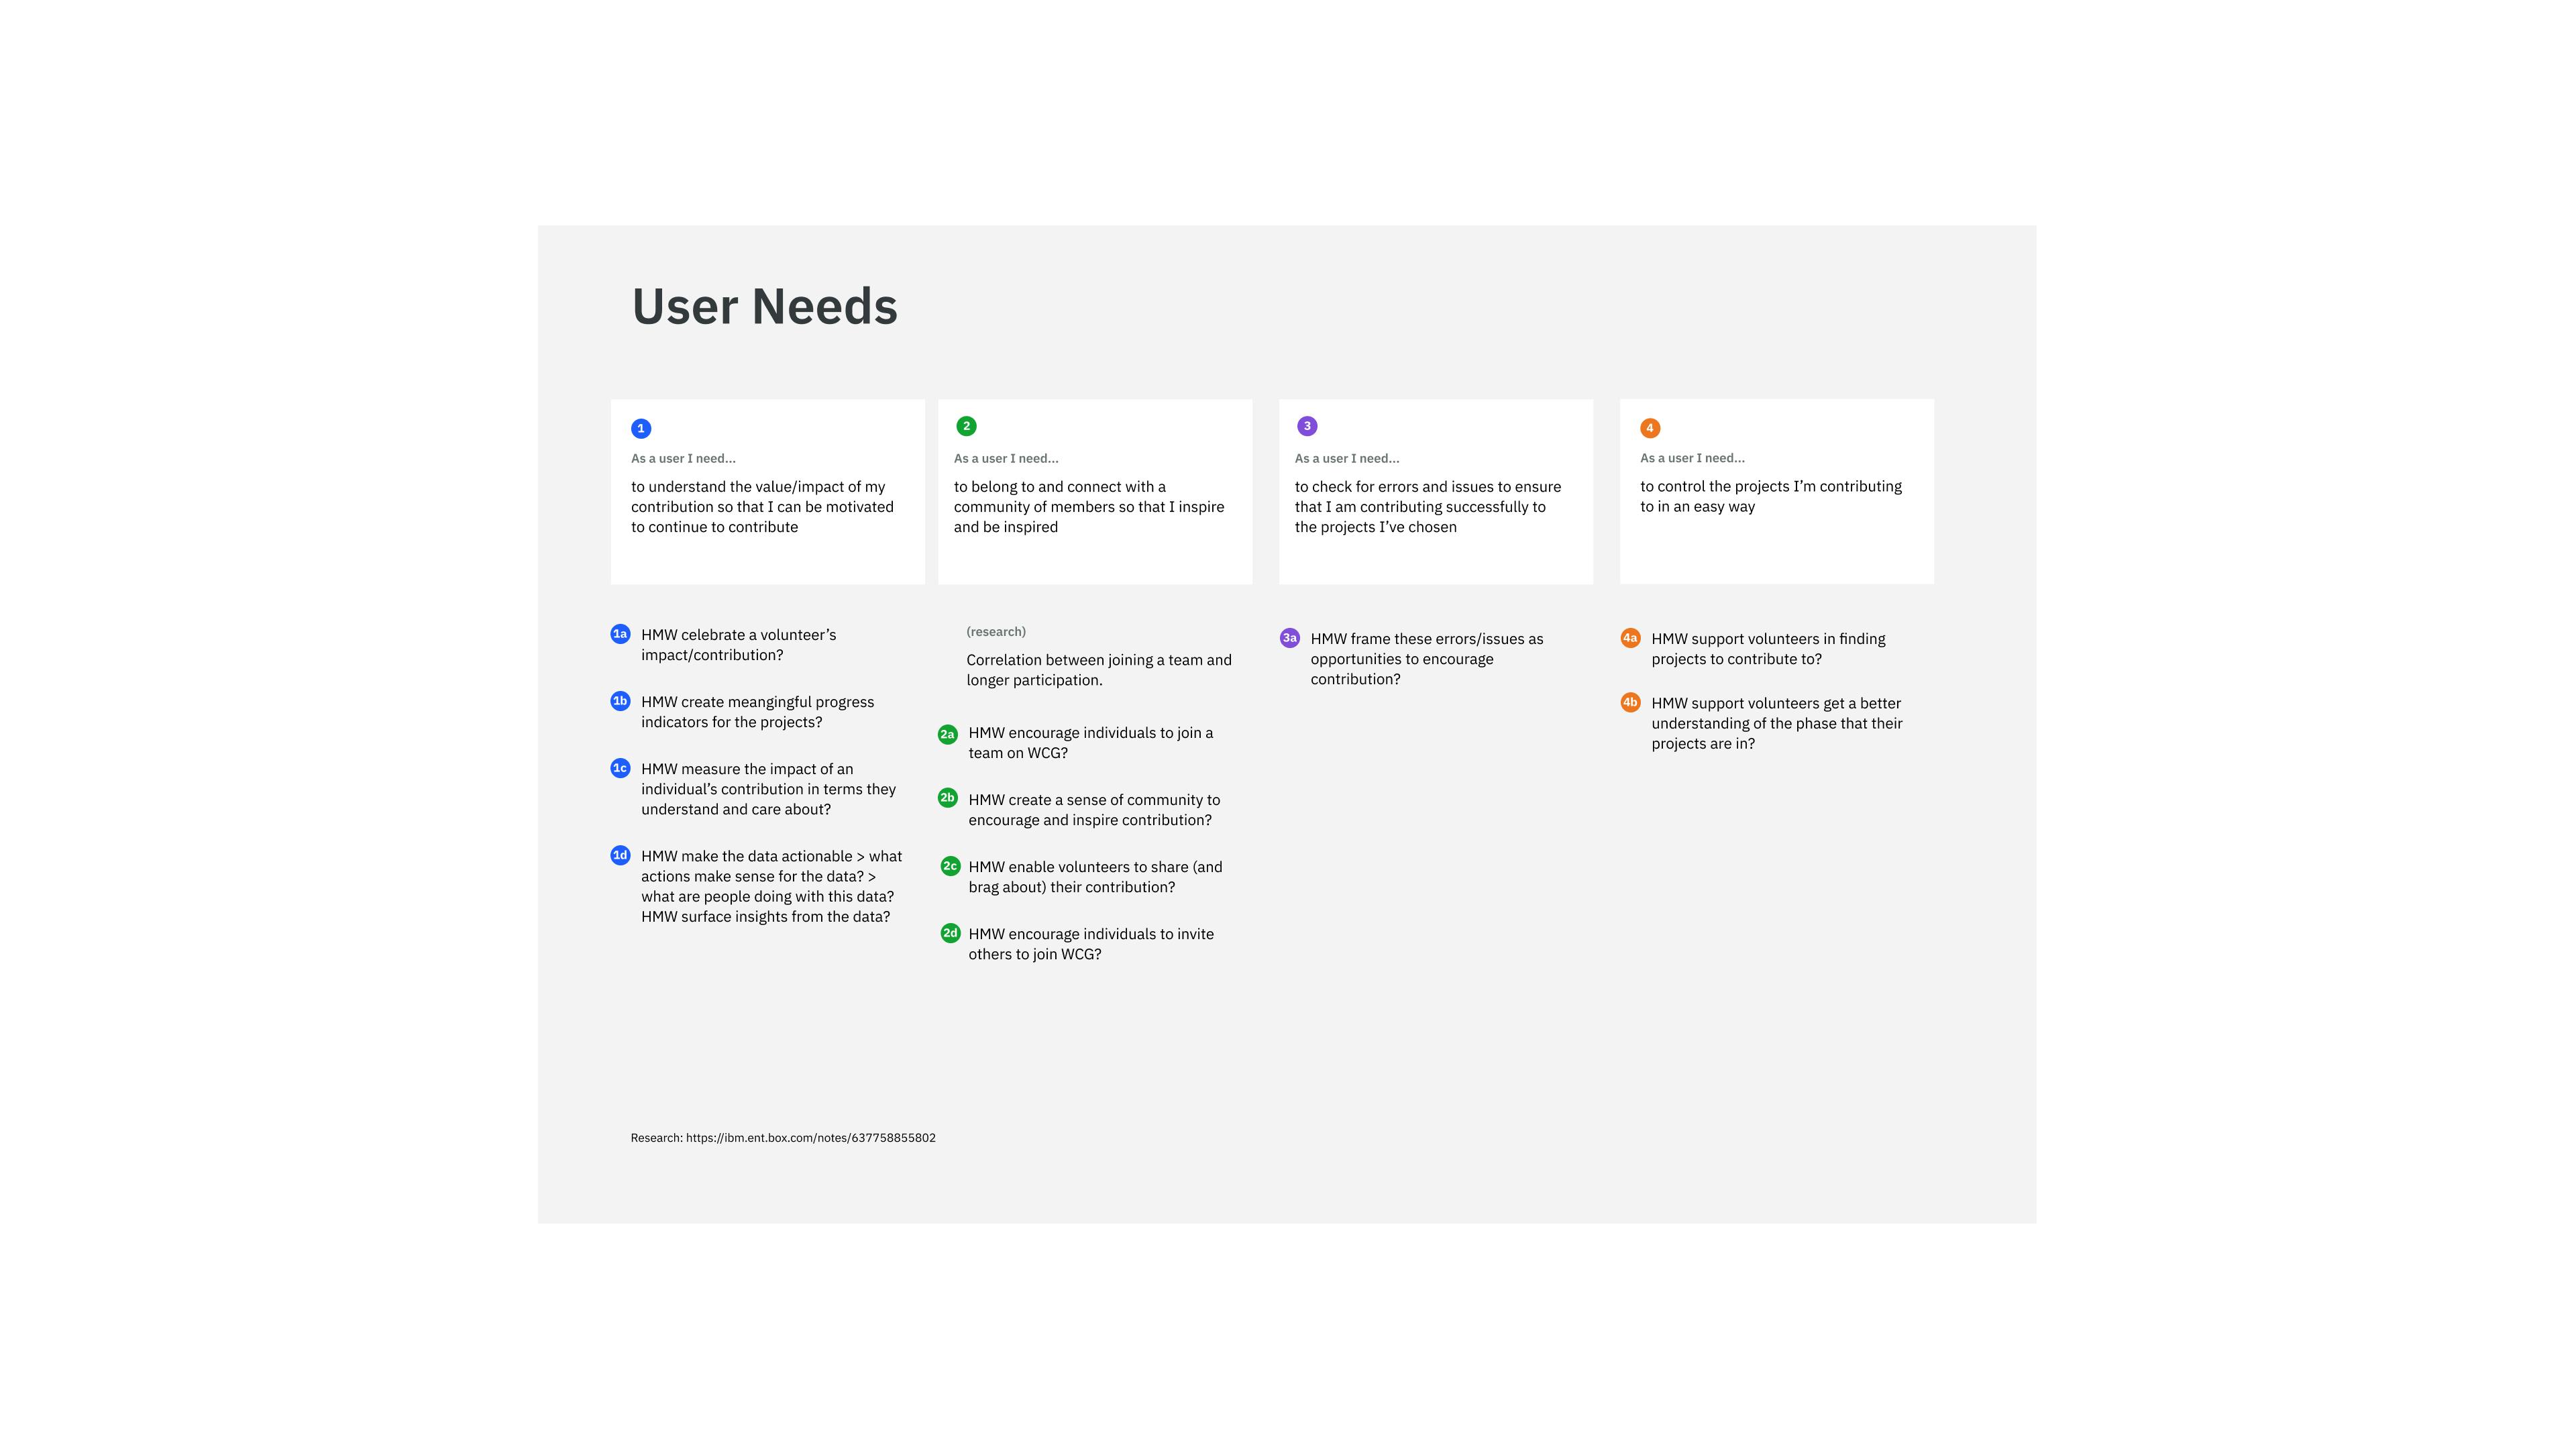 Screenshot of Figma file outlining user-needs